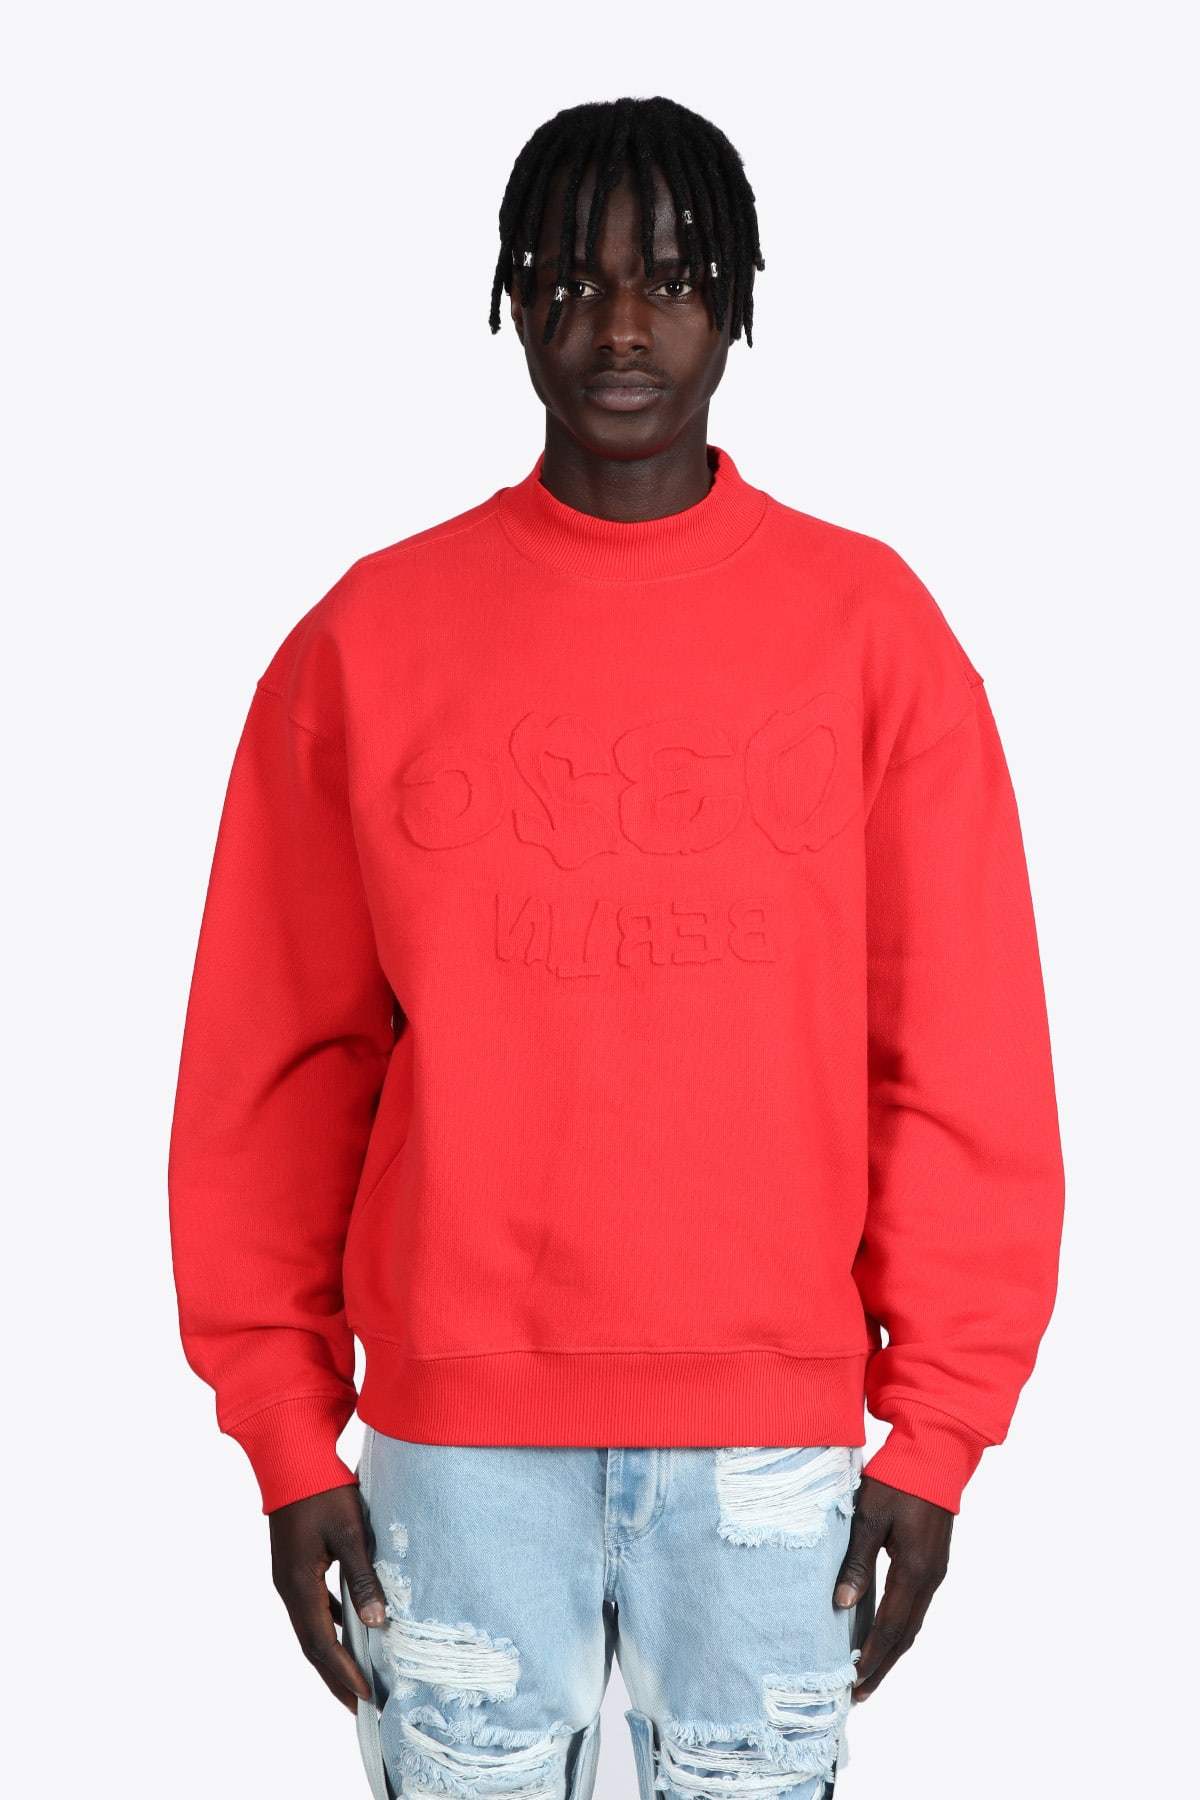 032c Mockneck Sweatshirt Red cotton mockneck sweatshirt